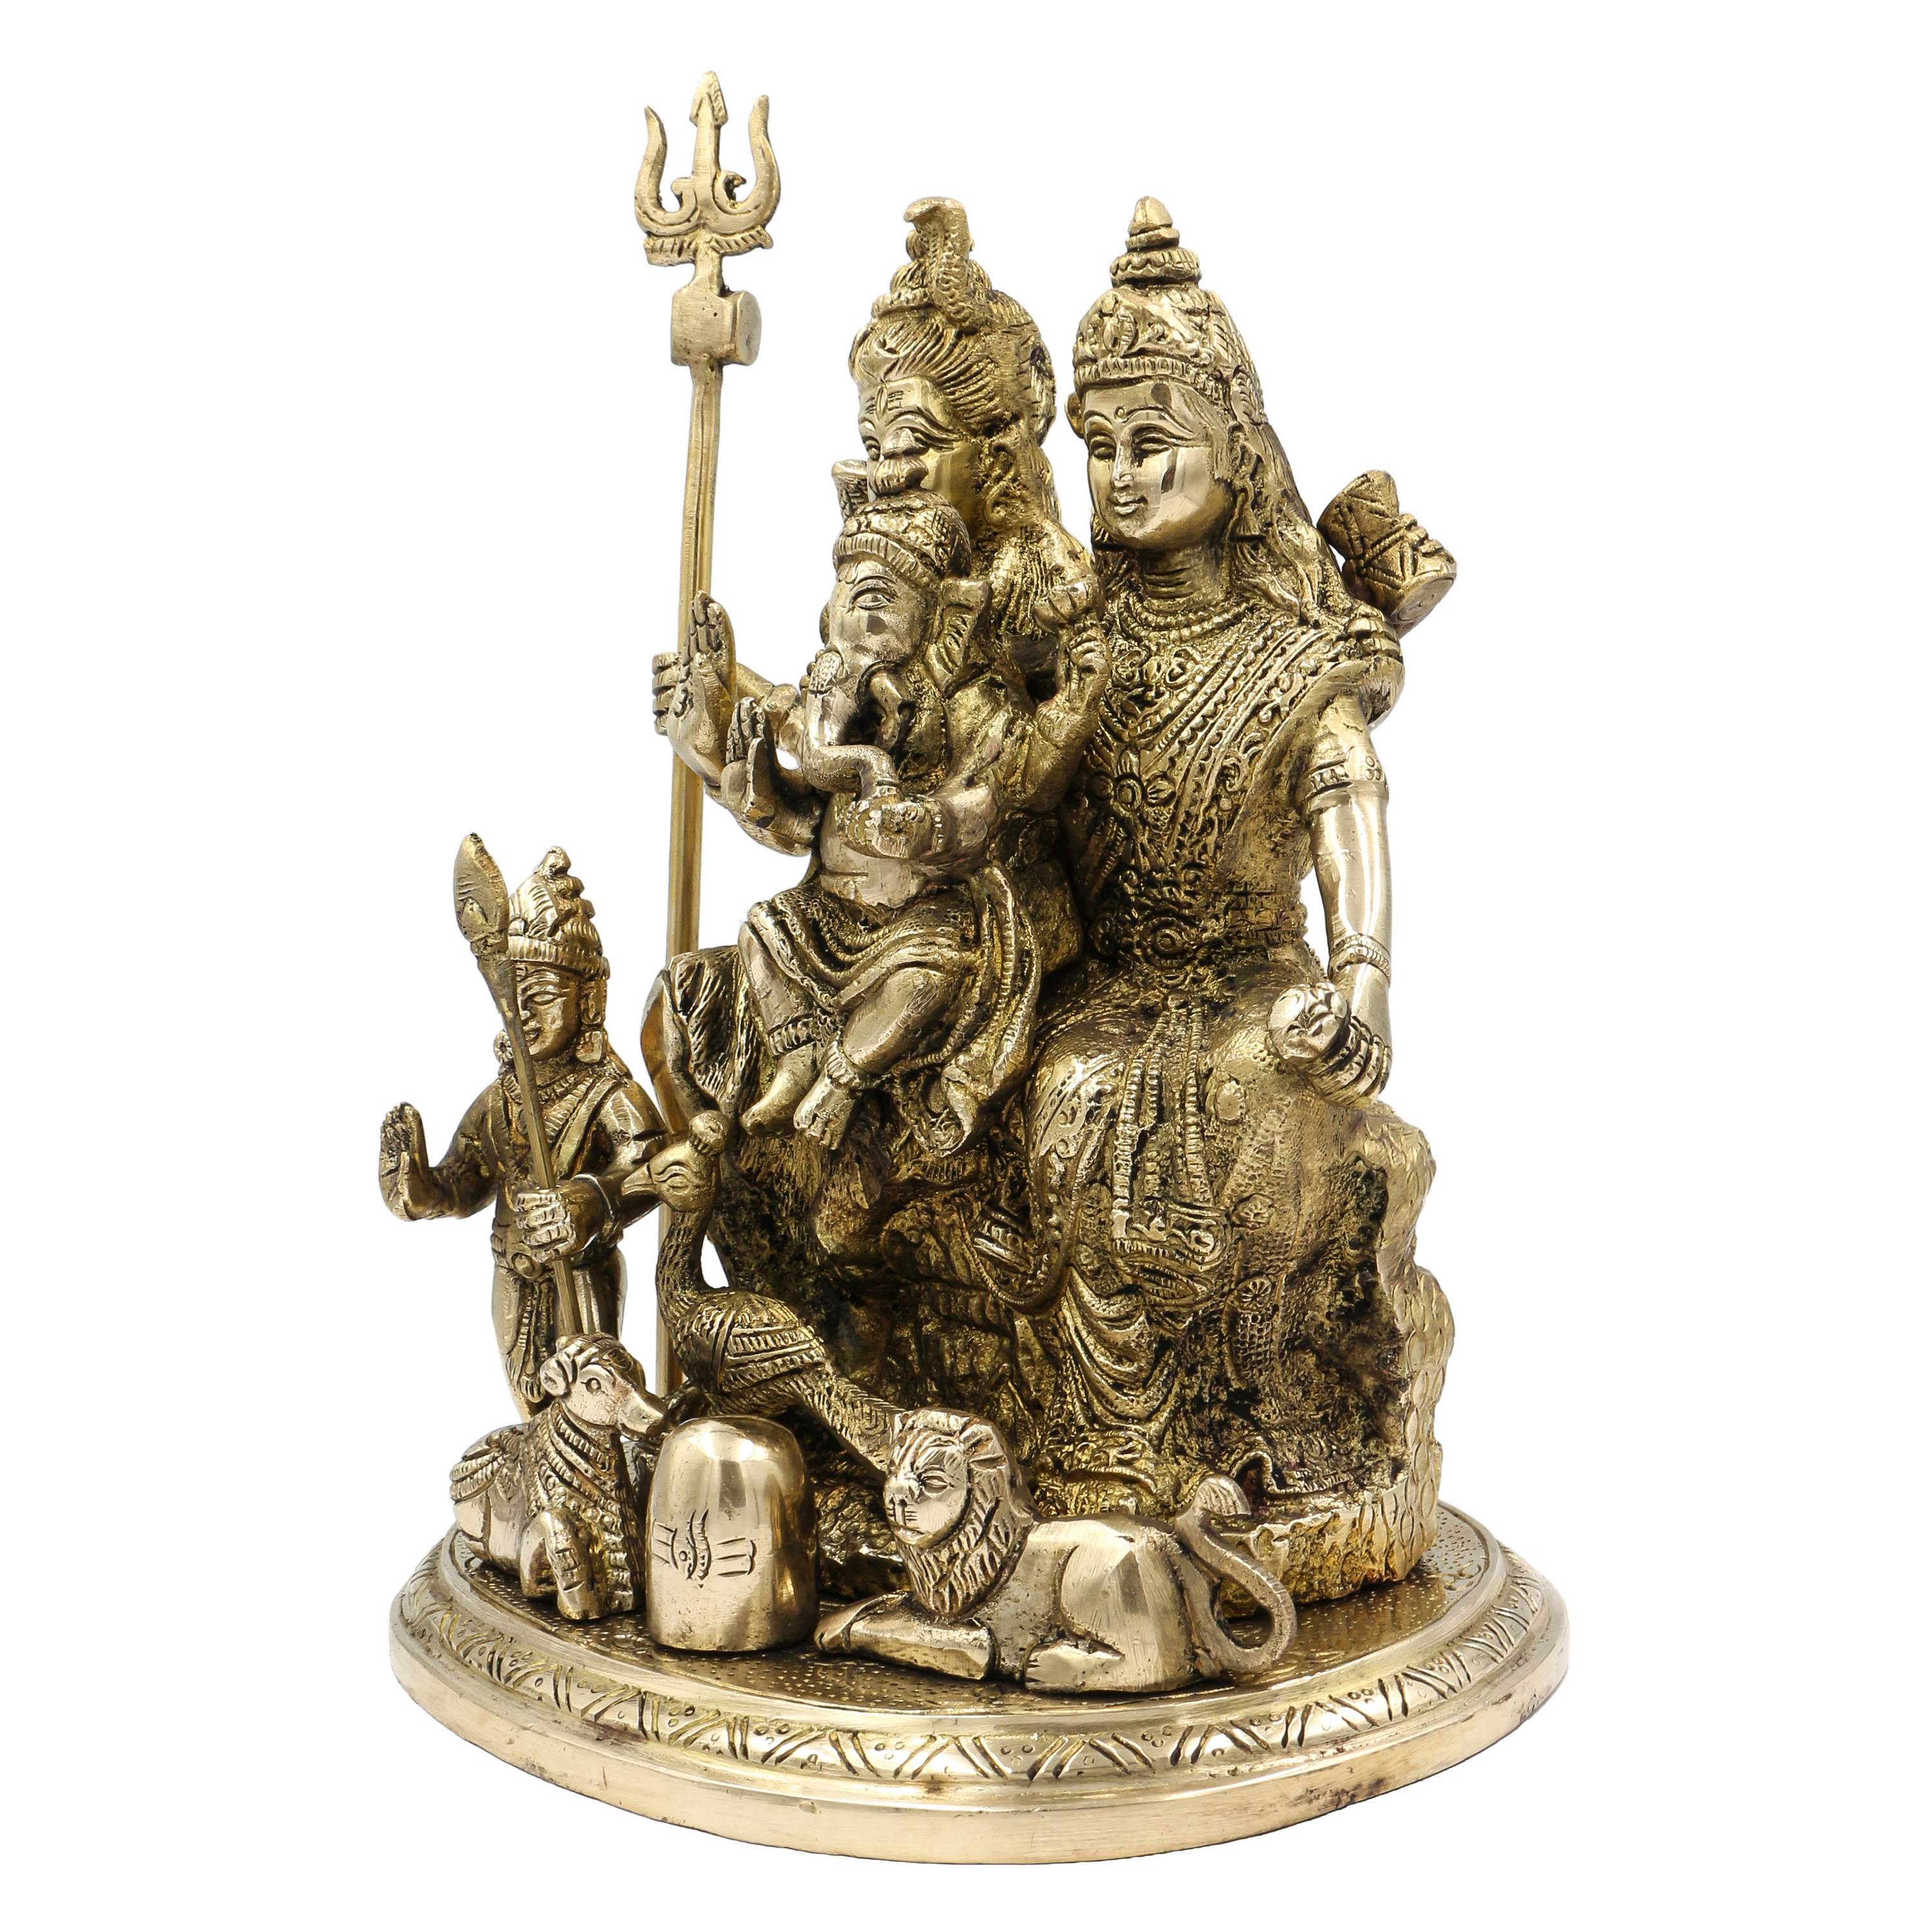 Nepali Statue Of Shiva And Parvati With Ganesh And Kumar Or Kartikeya, sand Casting, Glossy Finishing